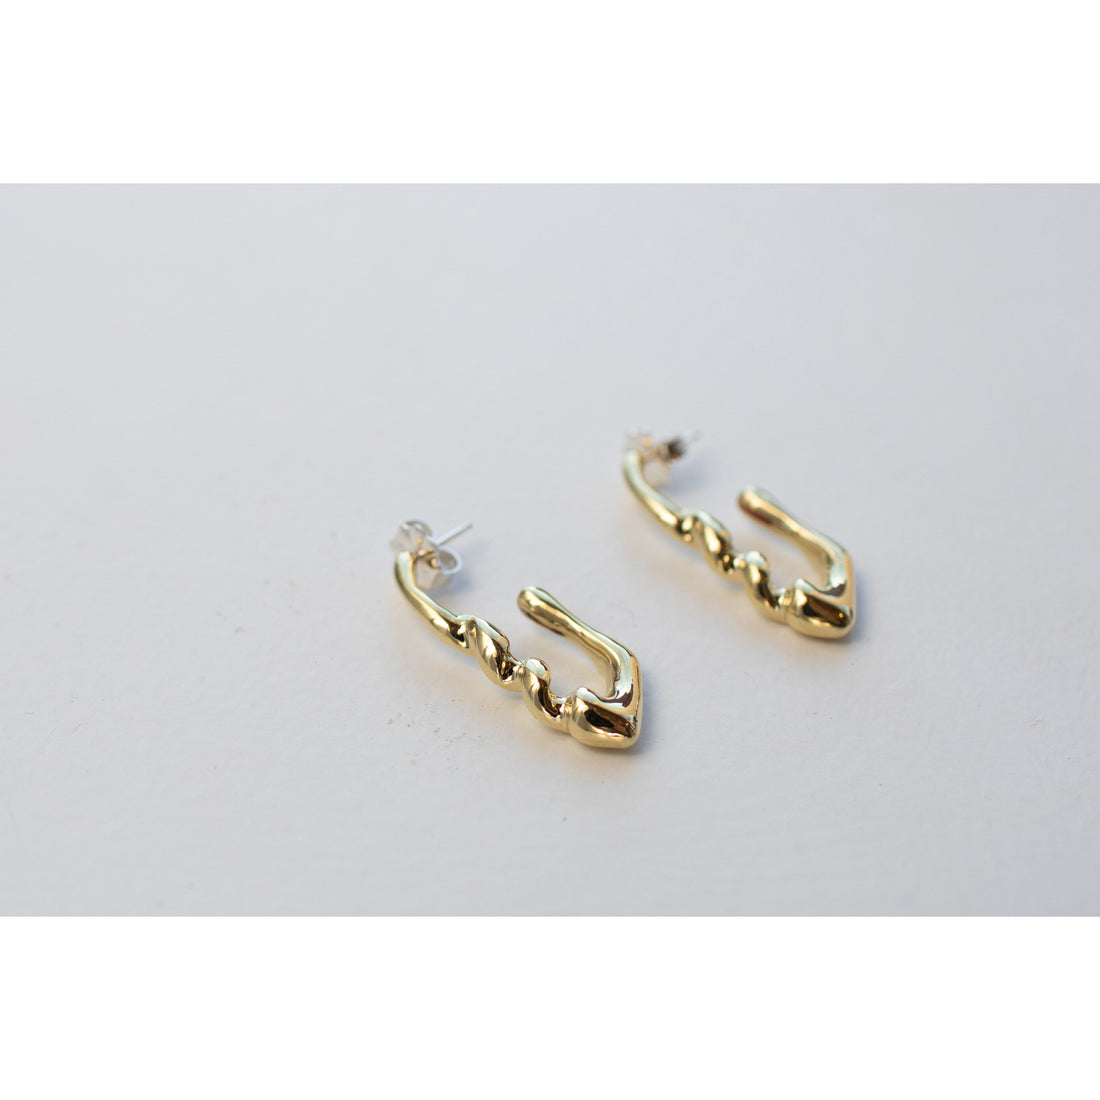 Leigh Miller Small Corkscrew Earrings in Brass